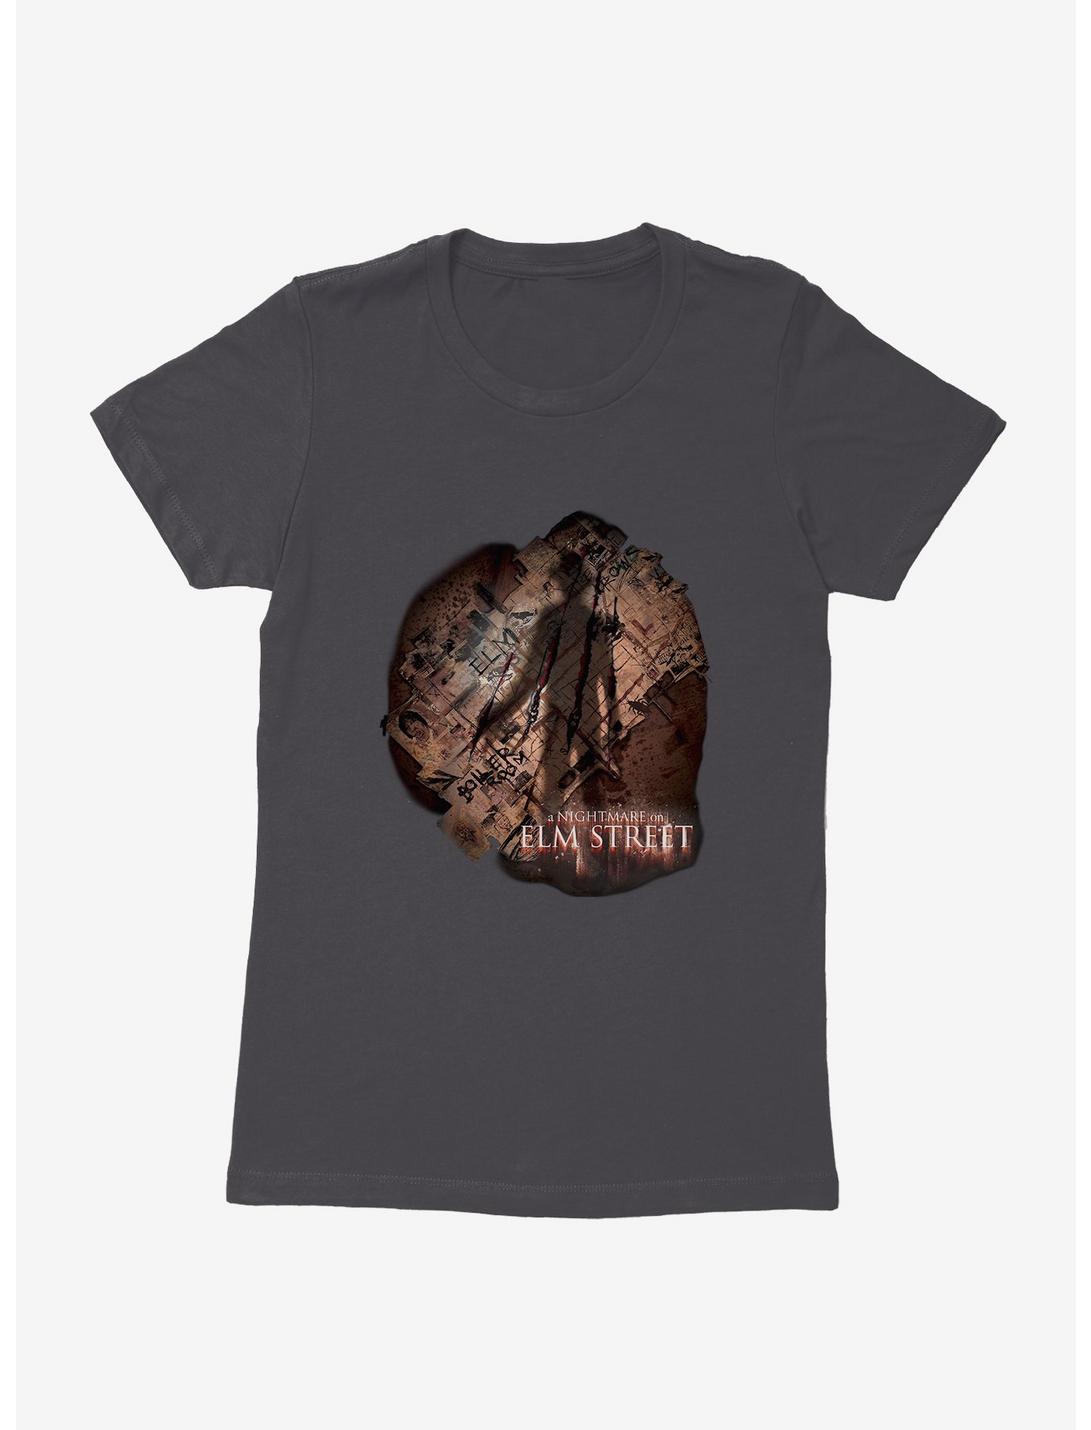 A Nightmare On Elm Street Shadows Womens T-Shirt, HEAVY METAL, hi-res